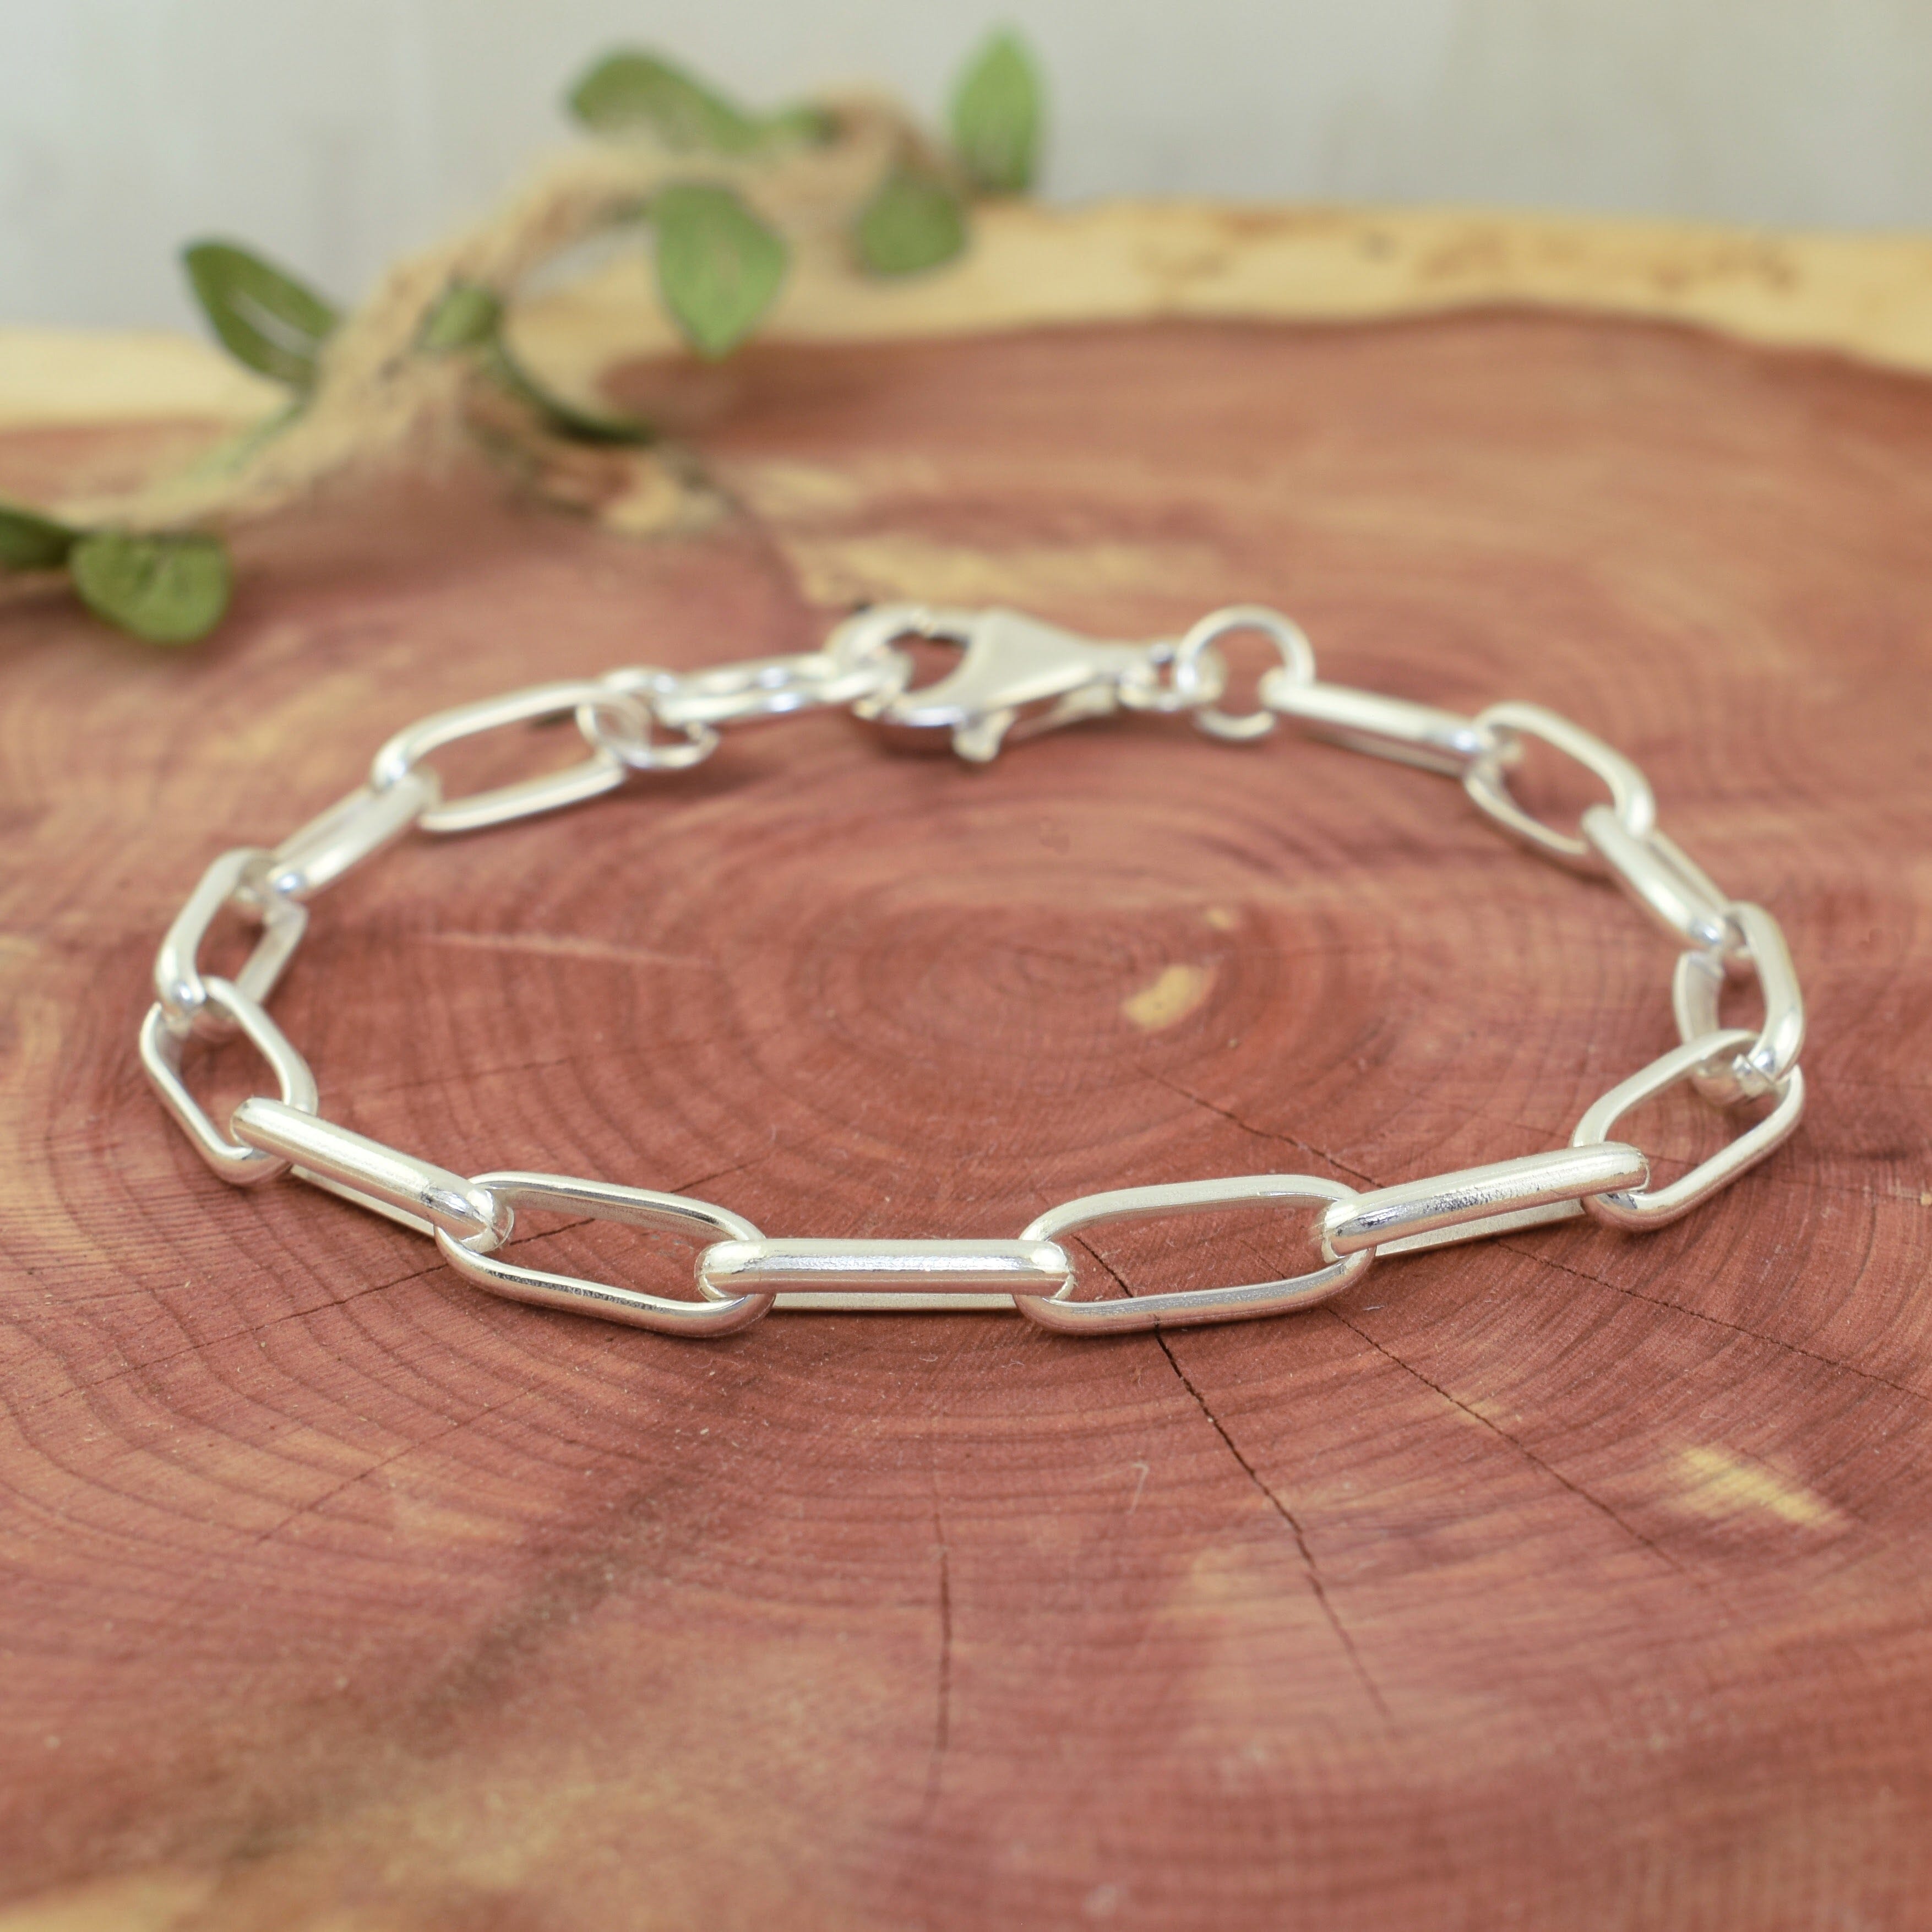 Southwest style sterling silver chain bracelet